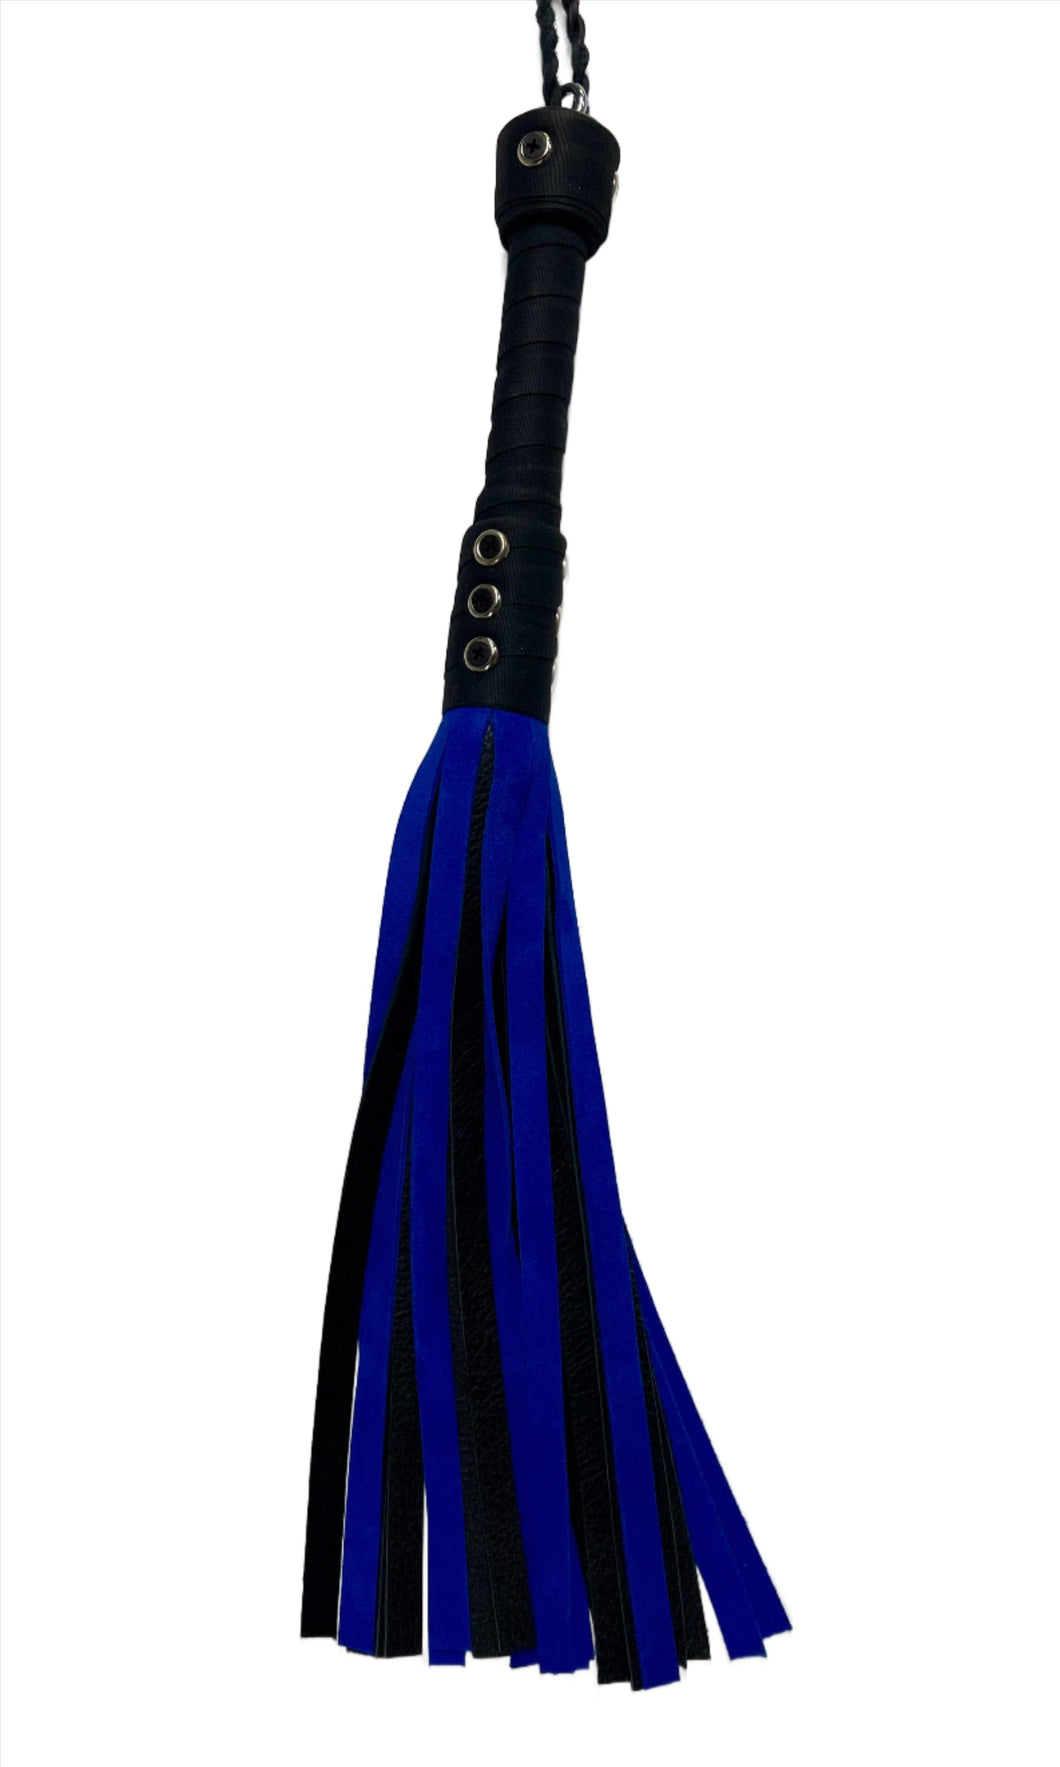 Bare Leatherworks - Midsize Cow Flogger (Black/Blue)